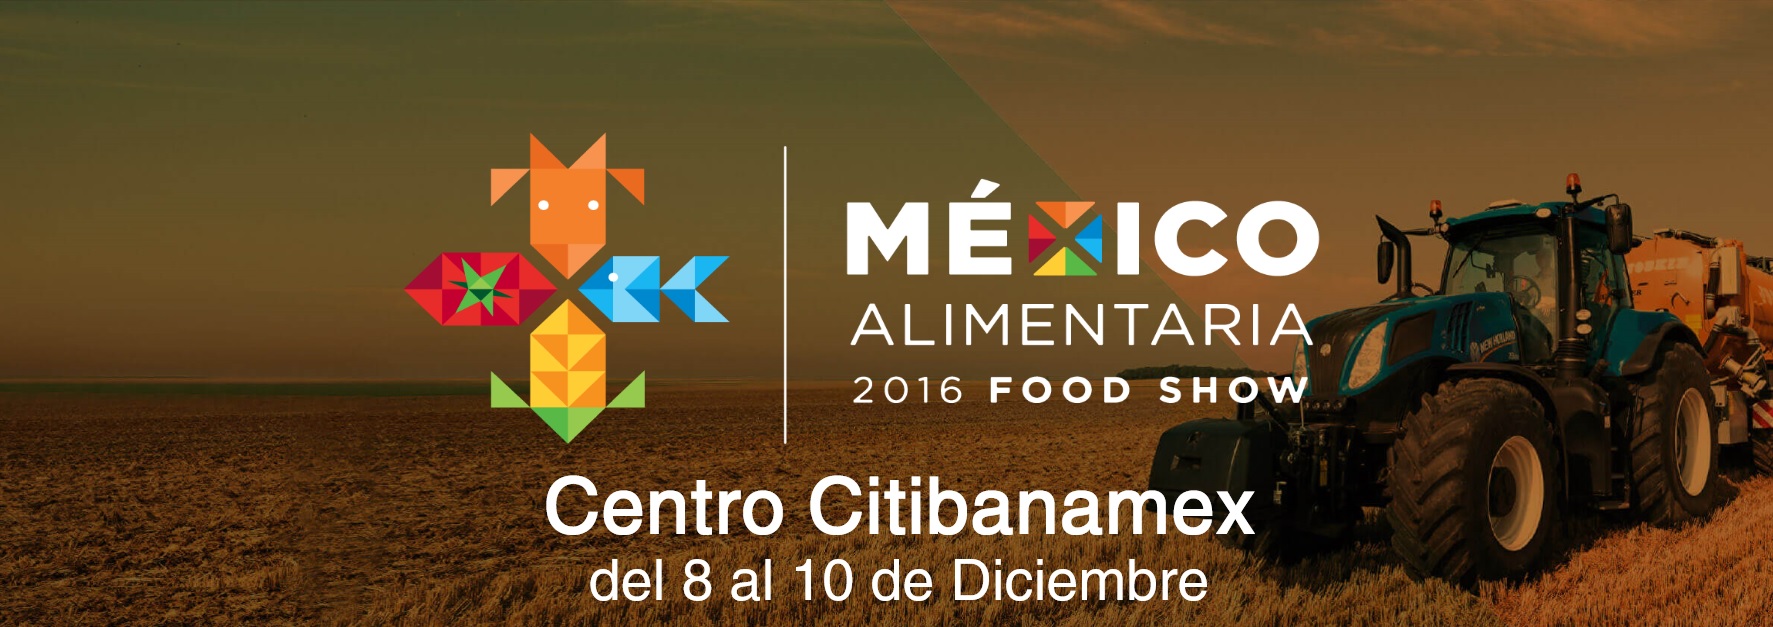 /cms/uploads/image/file/234441/mexico_alimentaria_food_show.jpg